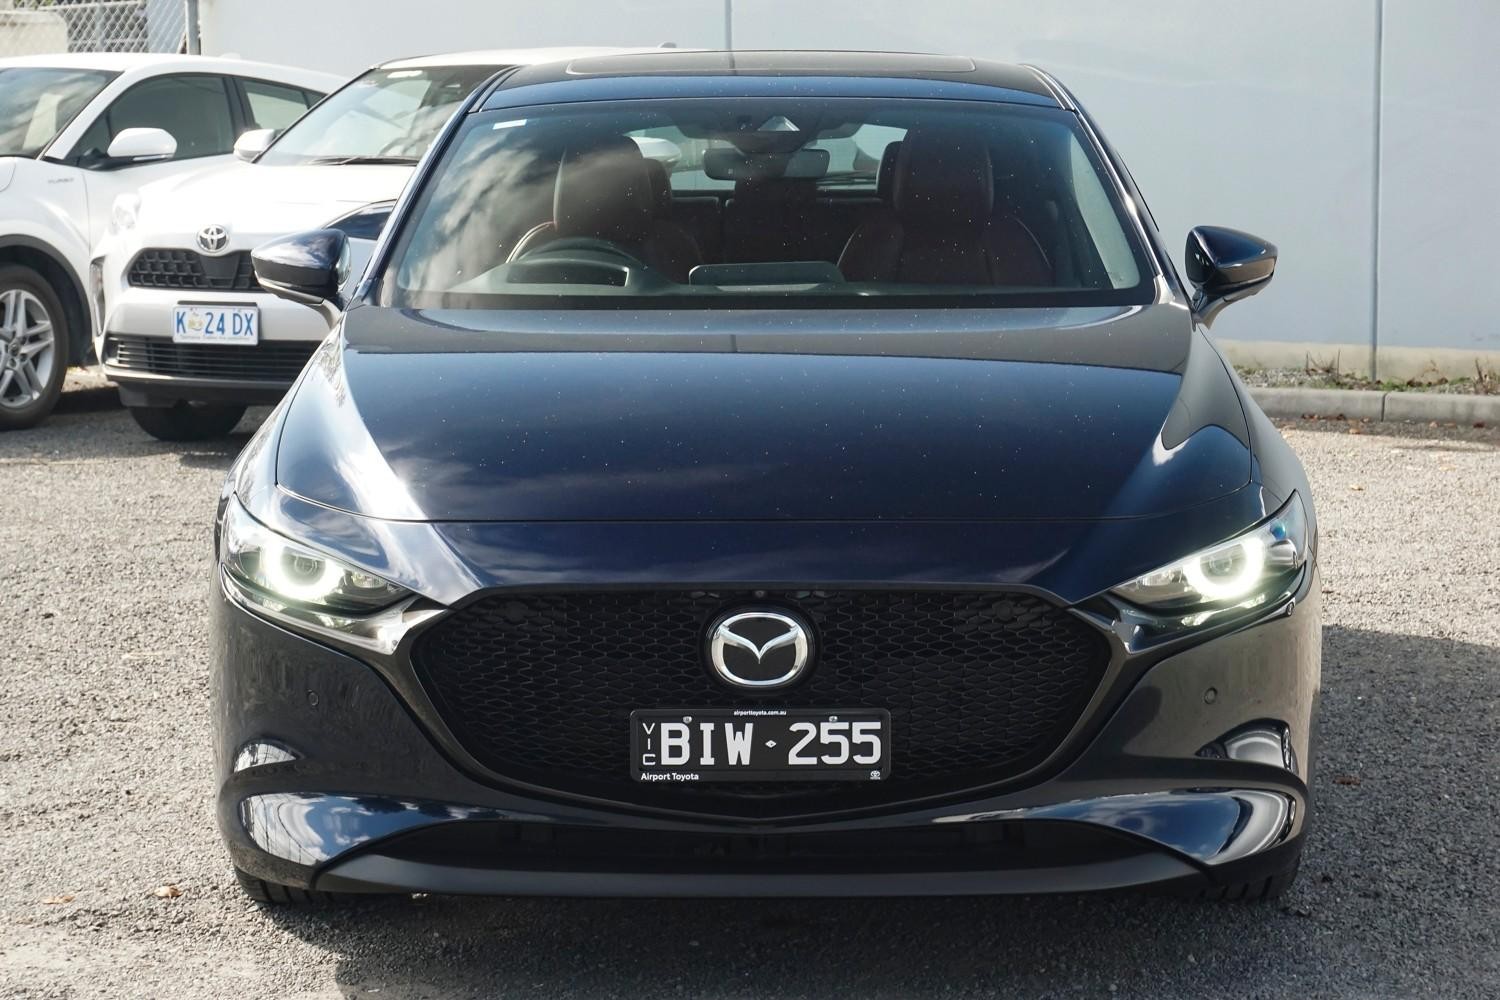 Mazda 3 image 3